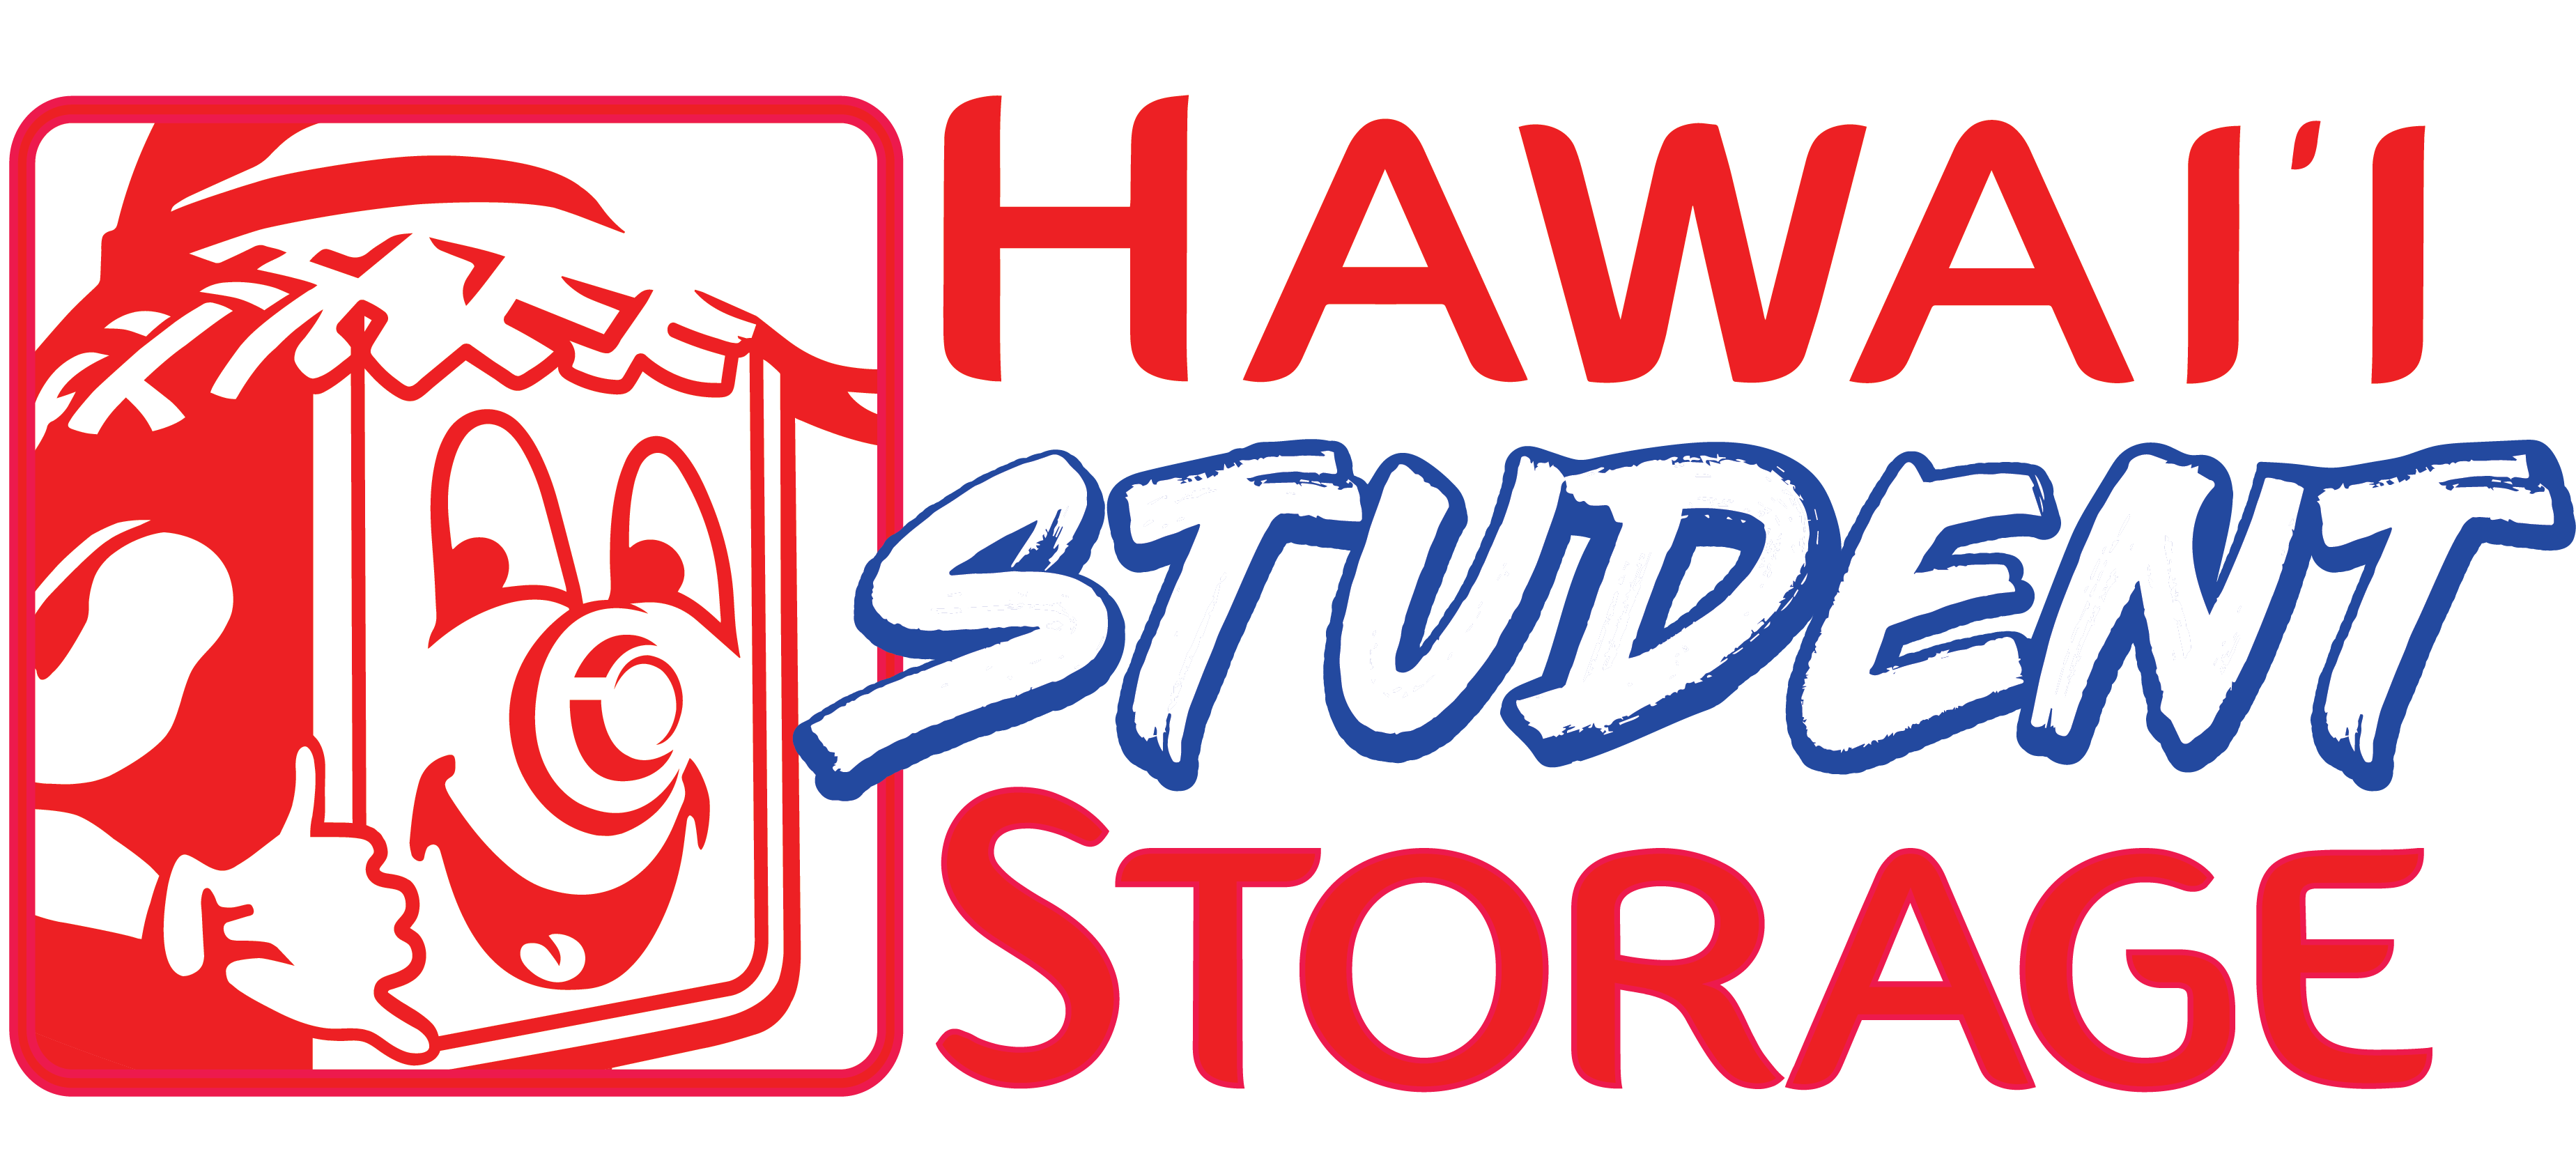 hss student logo